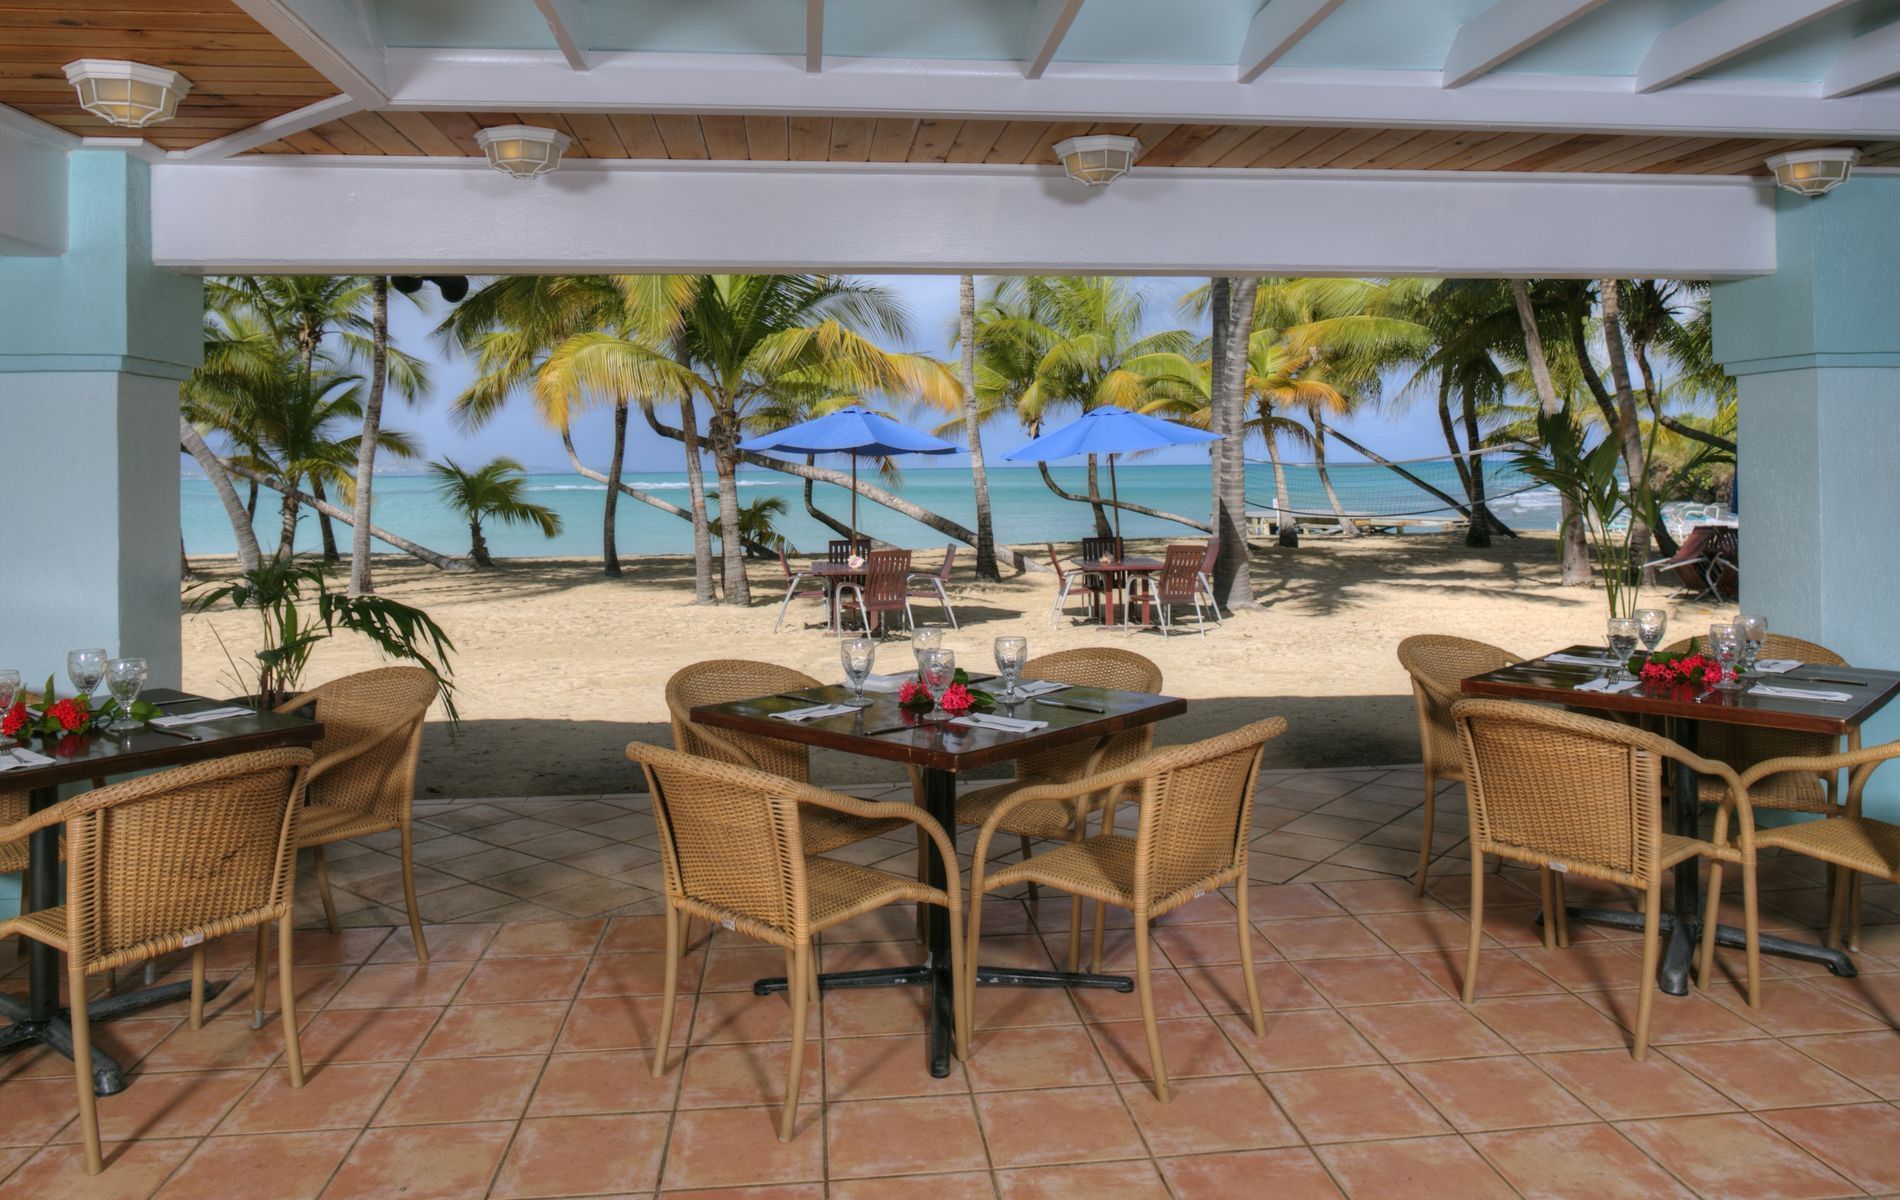 Dining area in Mermaid beach restaurant near The Buccaneer Resort St. Croix